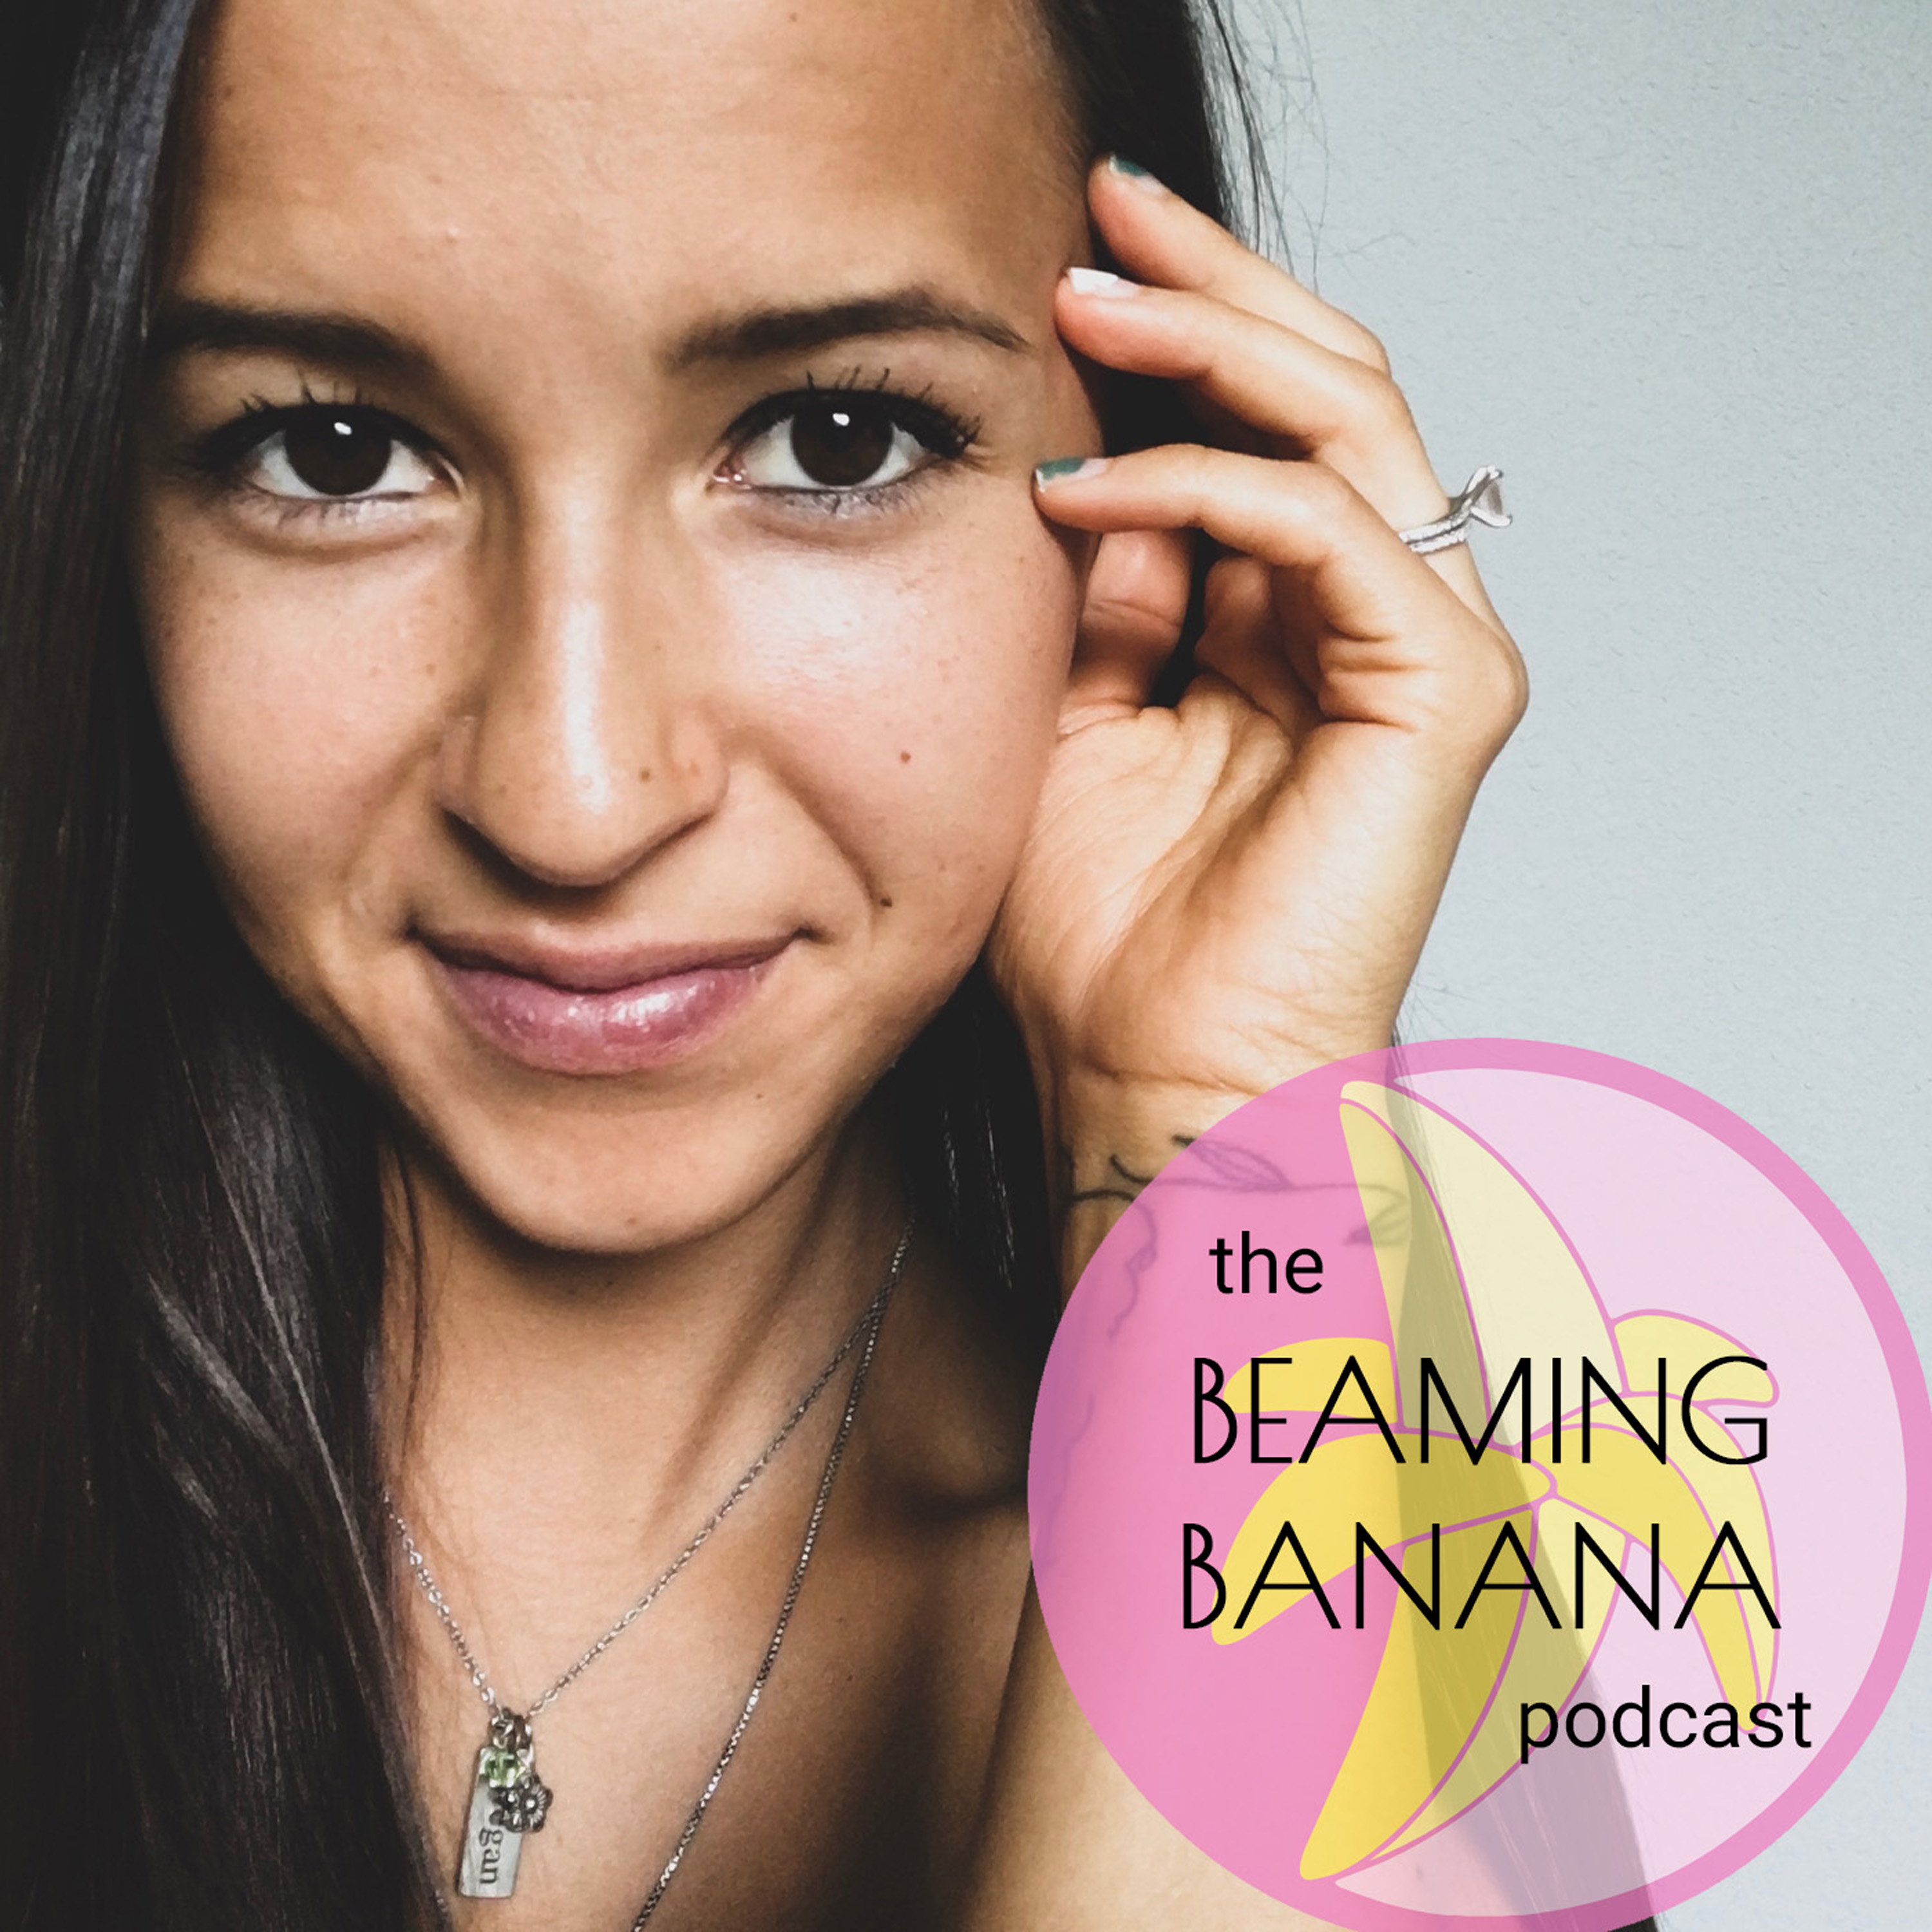 The Beaming Banana Podcast